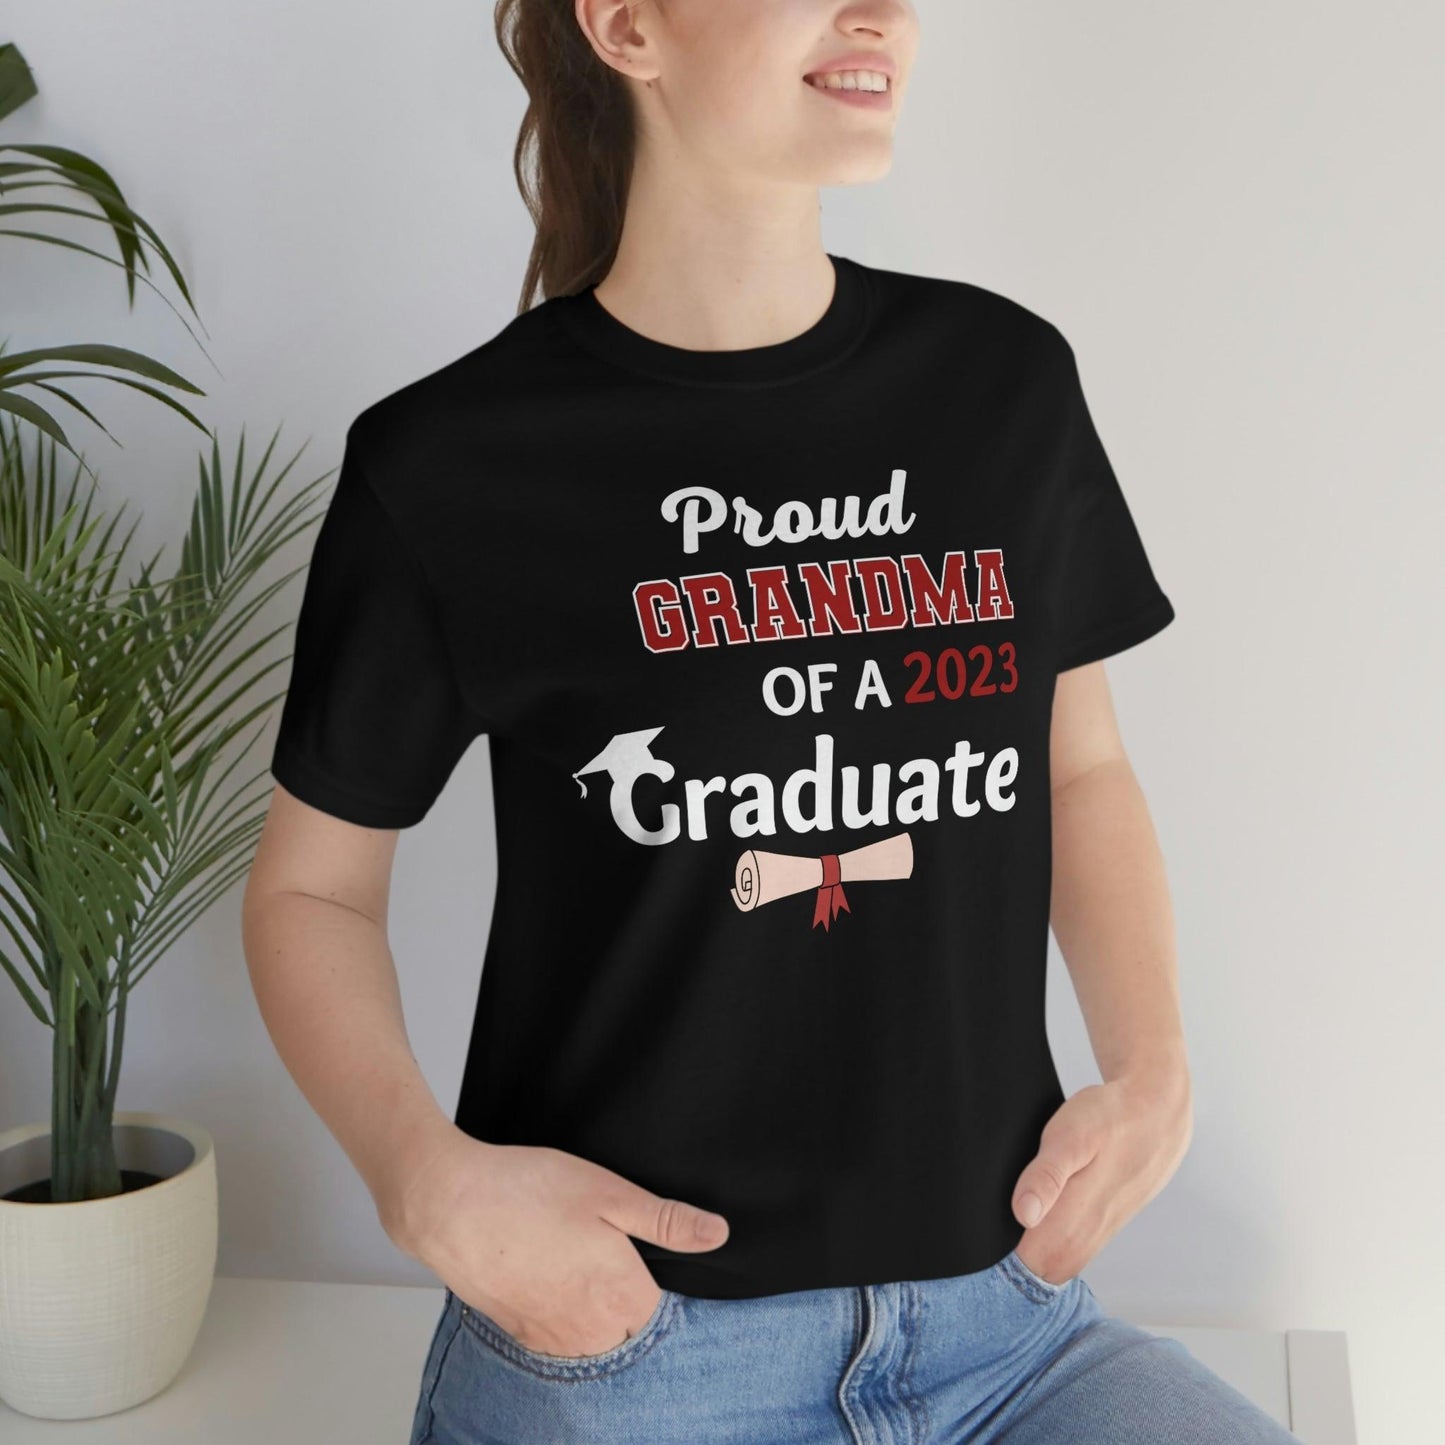 Proud Grandma of a graduate - Graduation shirt - Graduation gift